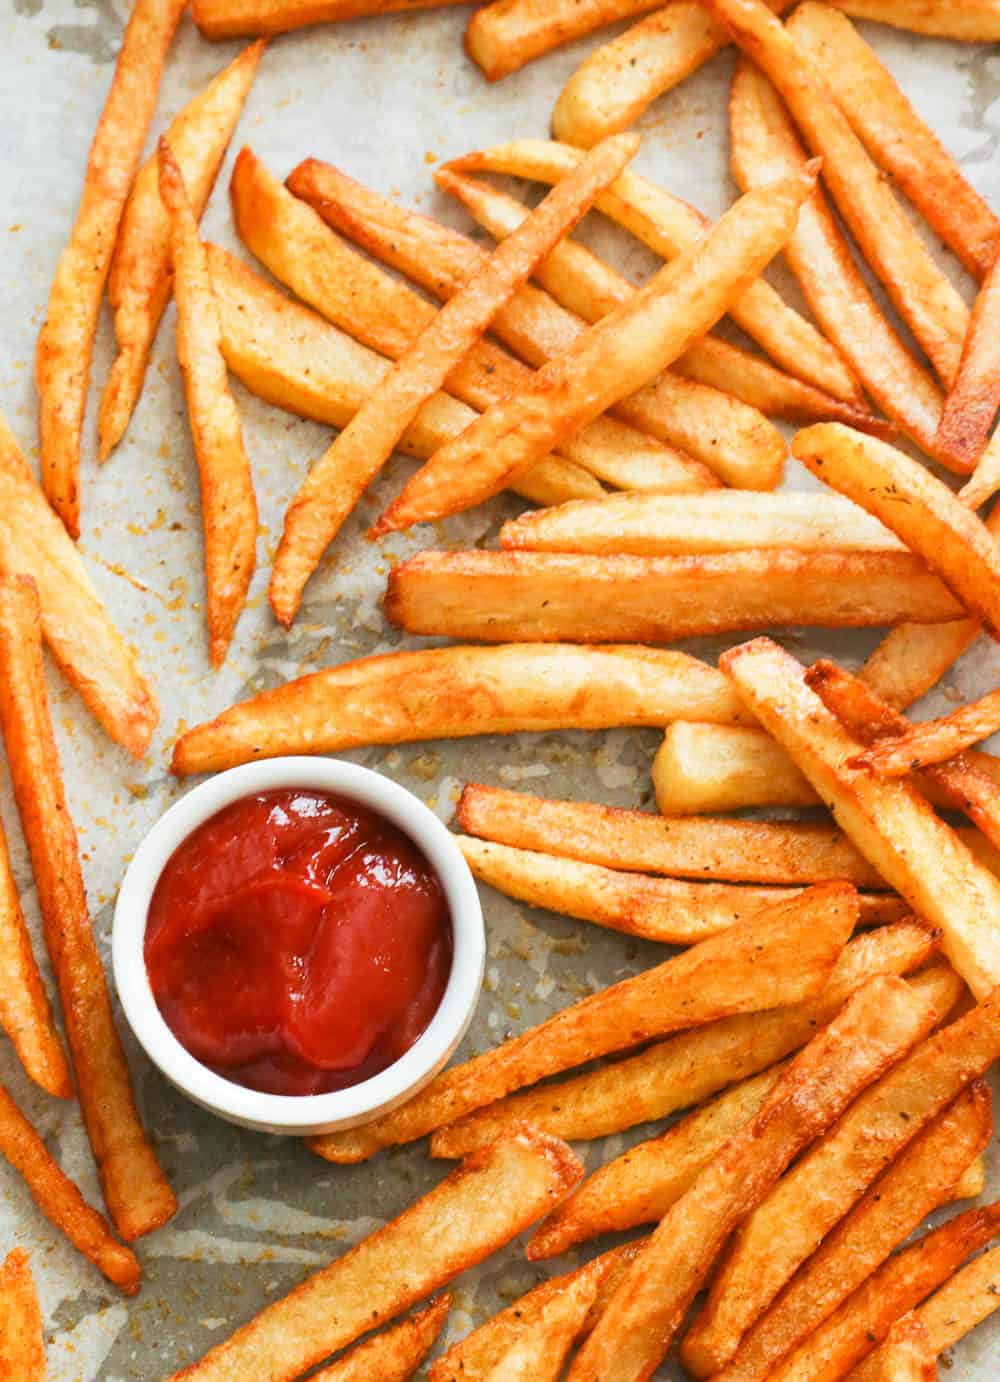 Seasoned fries with ketchup on a baking sheet.